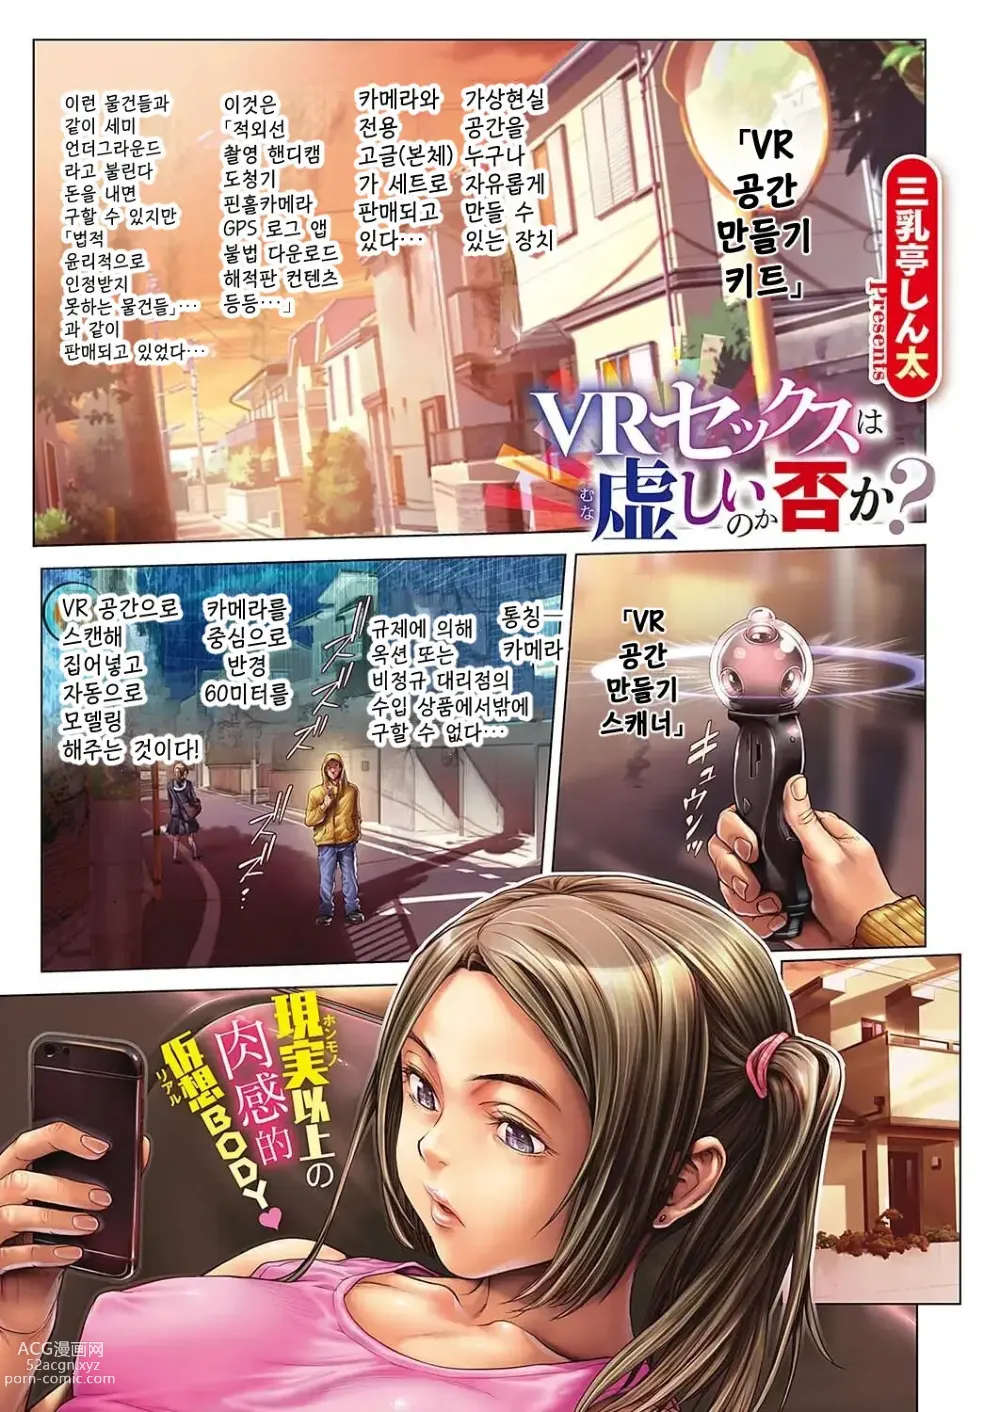 Page 1 of manga VR 섹스는 허무할까? 아닐까?